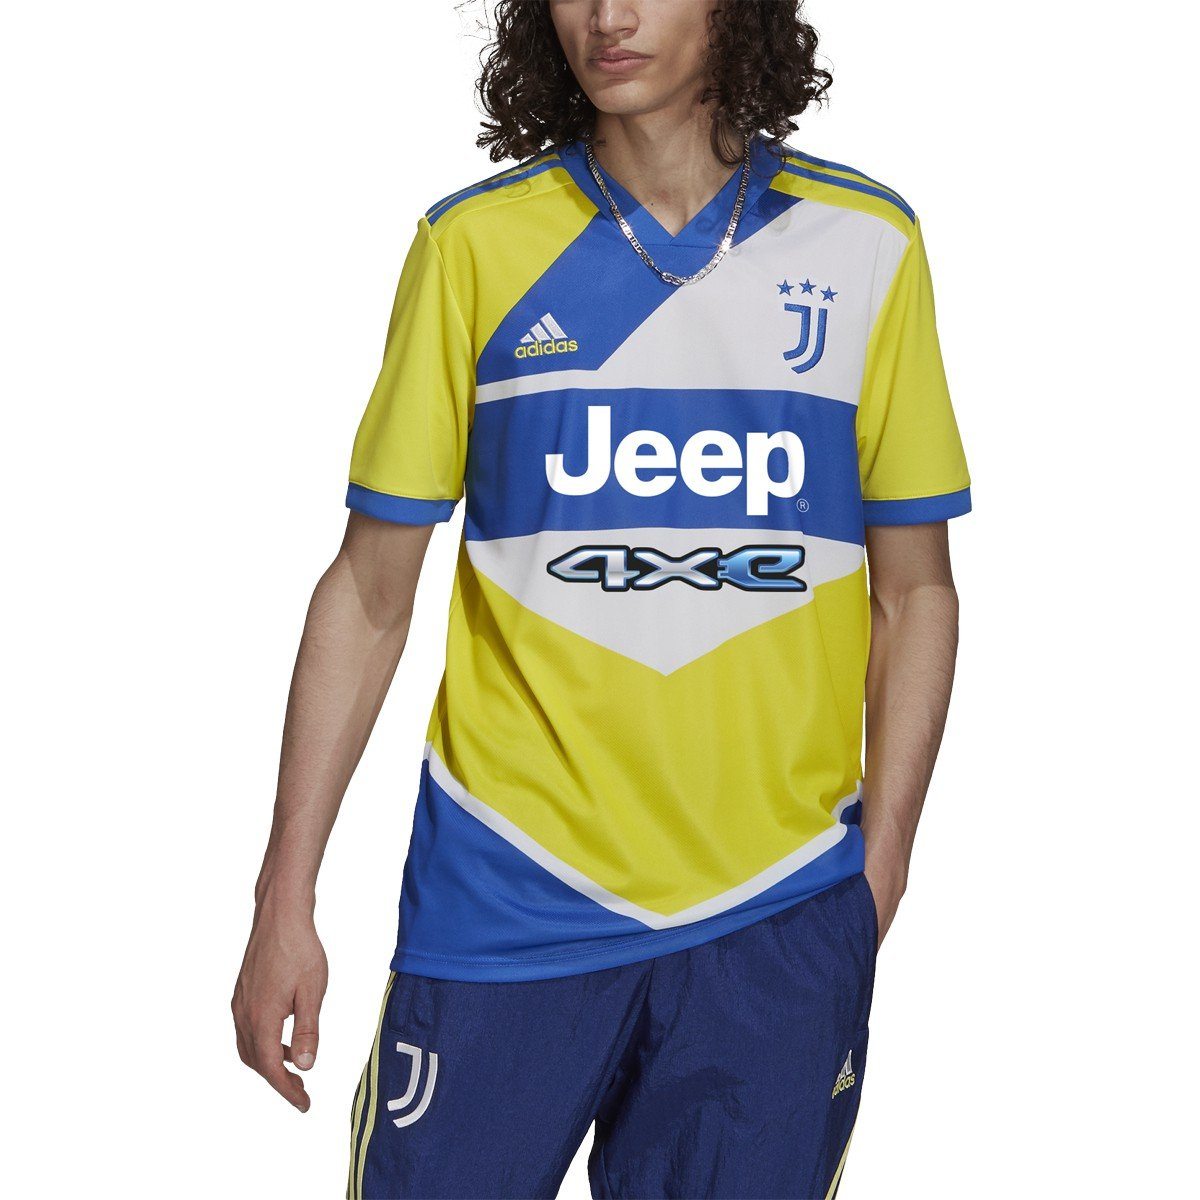 adidas Men's Juventus 21/22 3rd Jersey | GS1439 Jersey Adidas SM HI-RES BLUE 